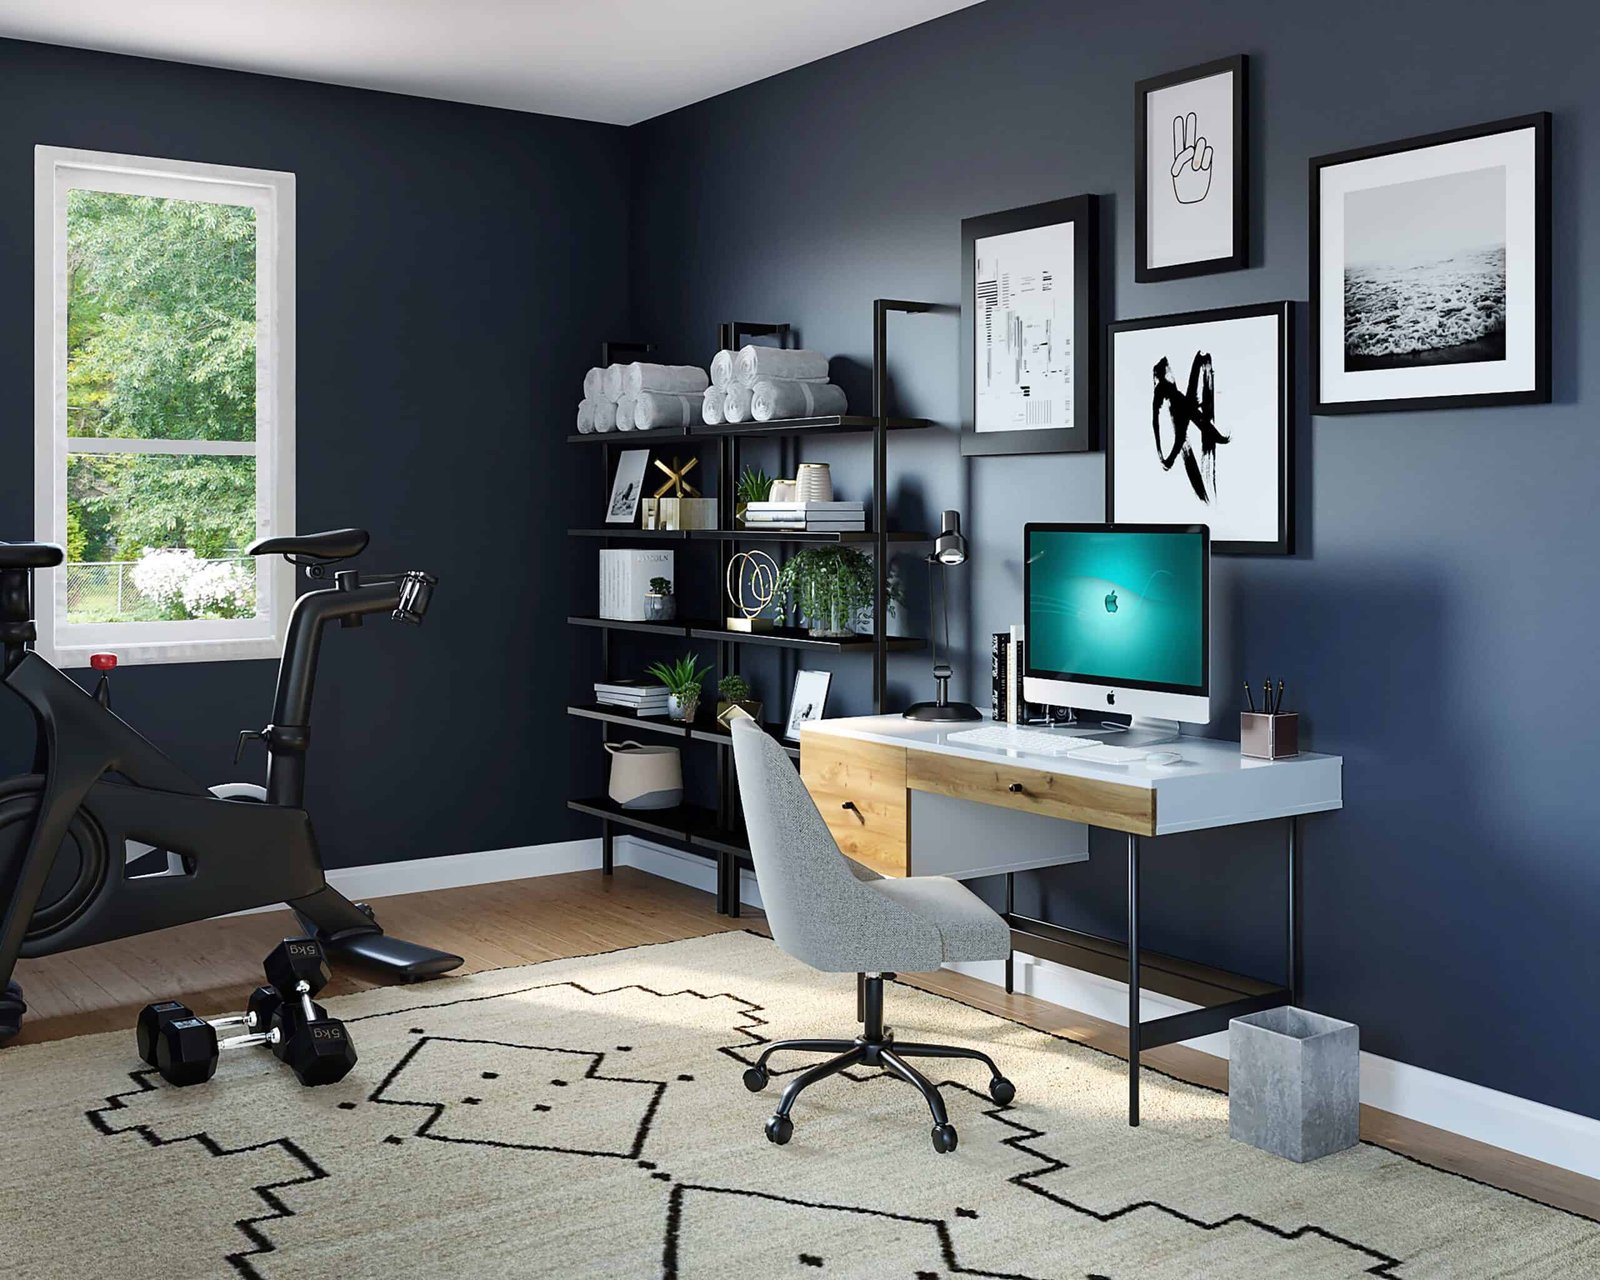 home office interior design